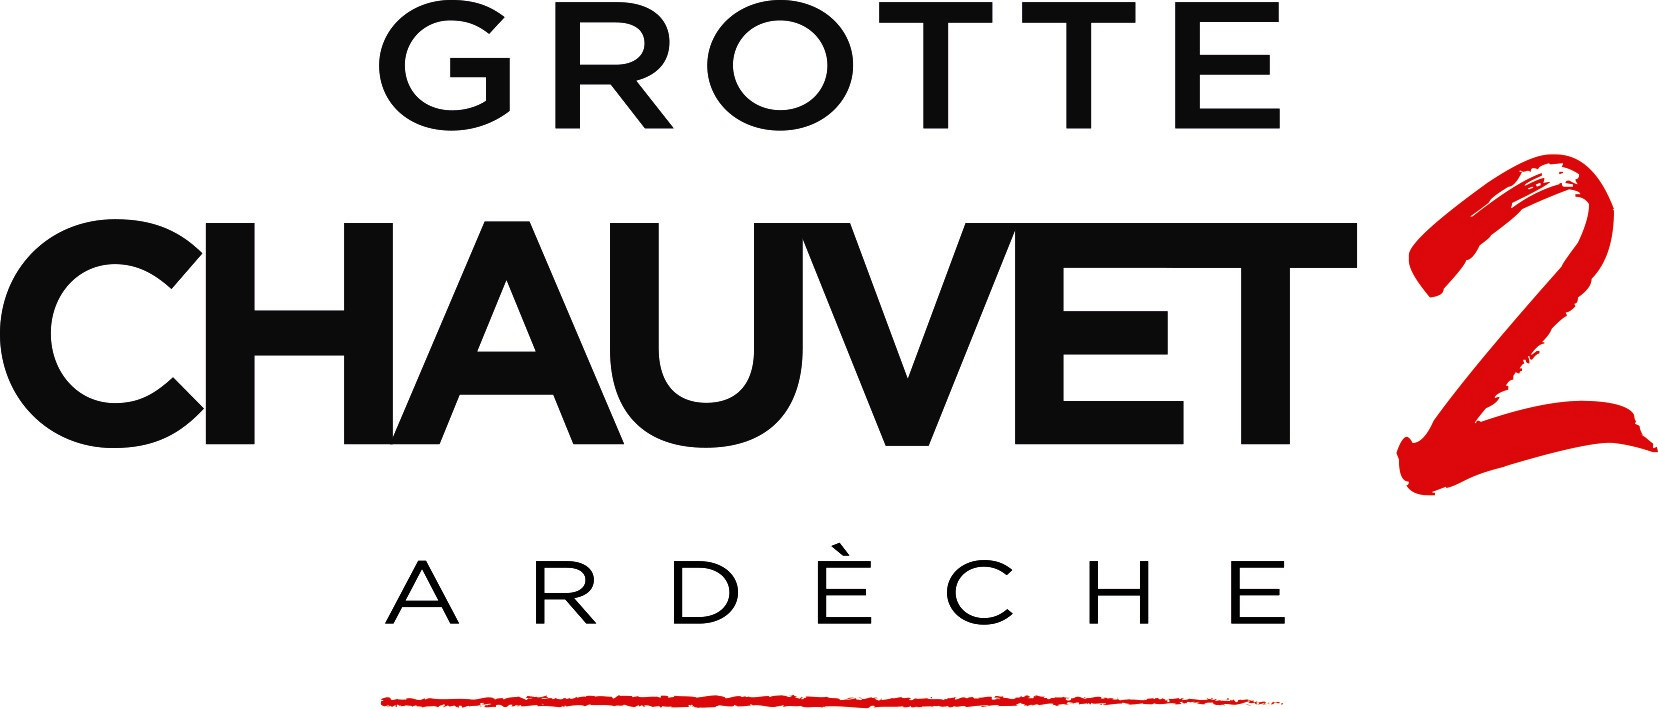 Logo Grotte Chauvet 2